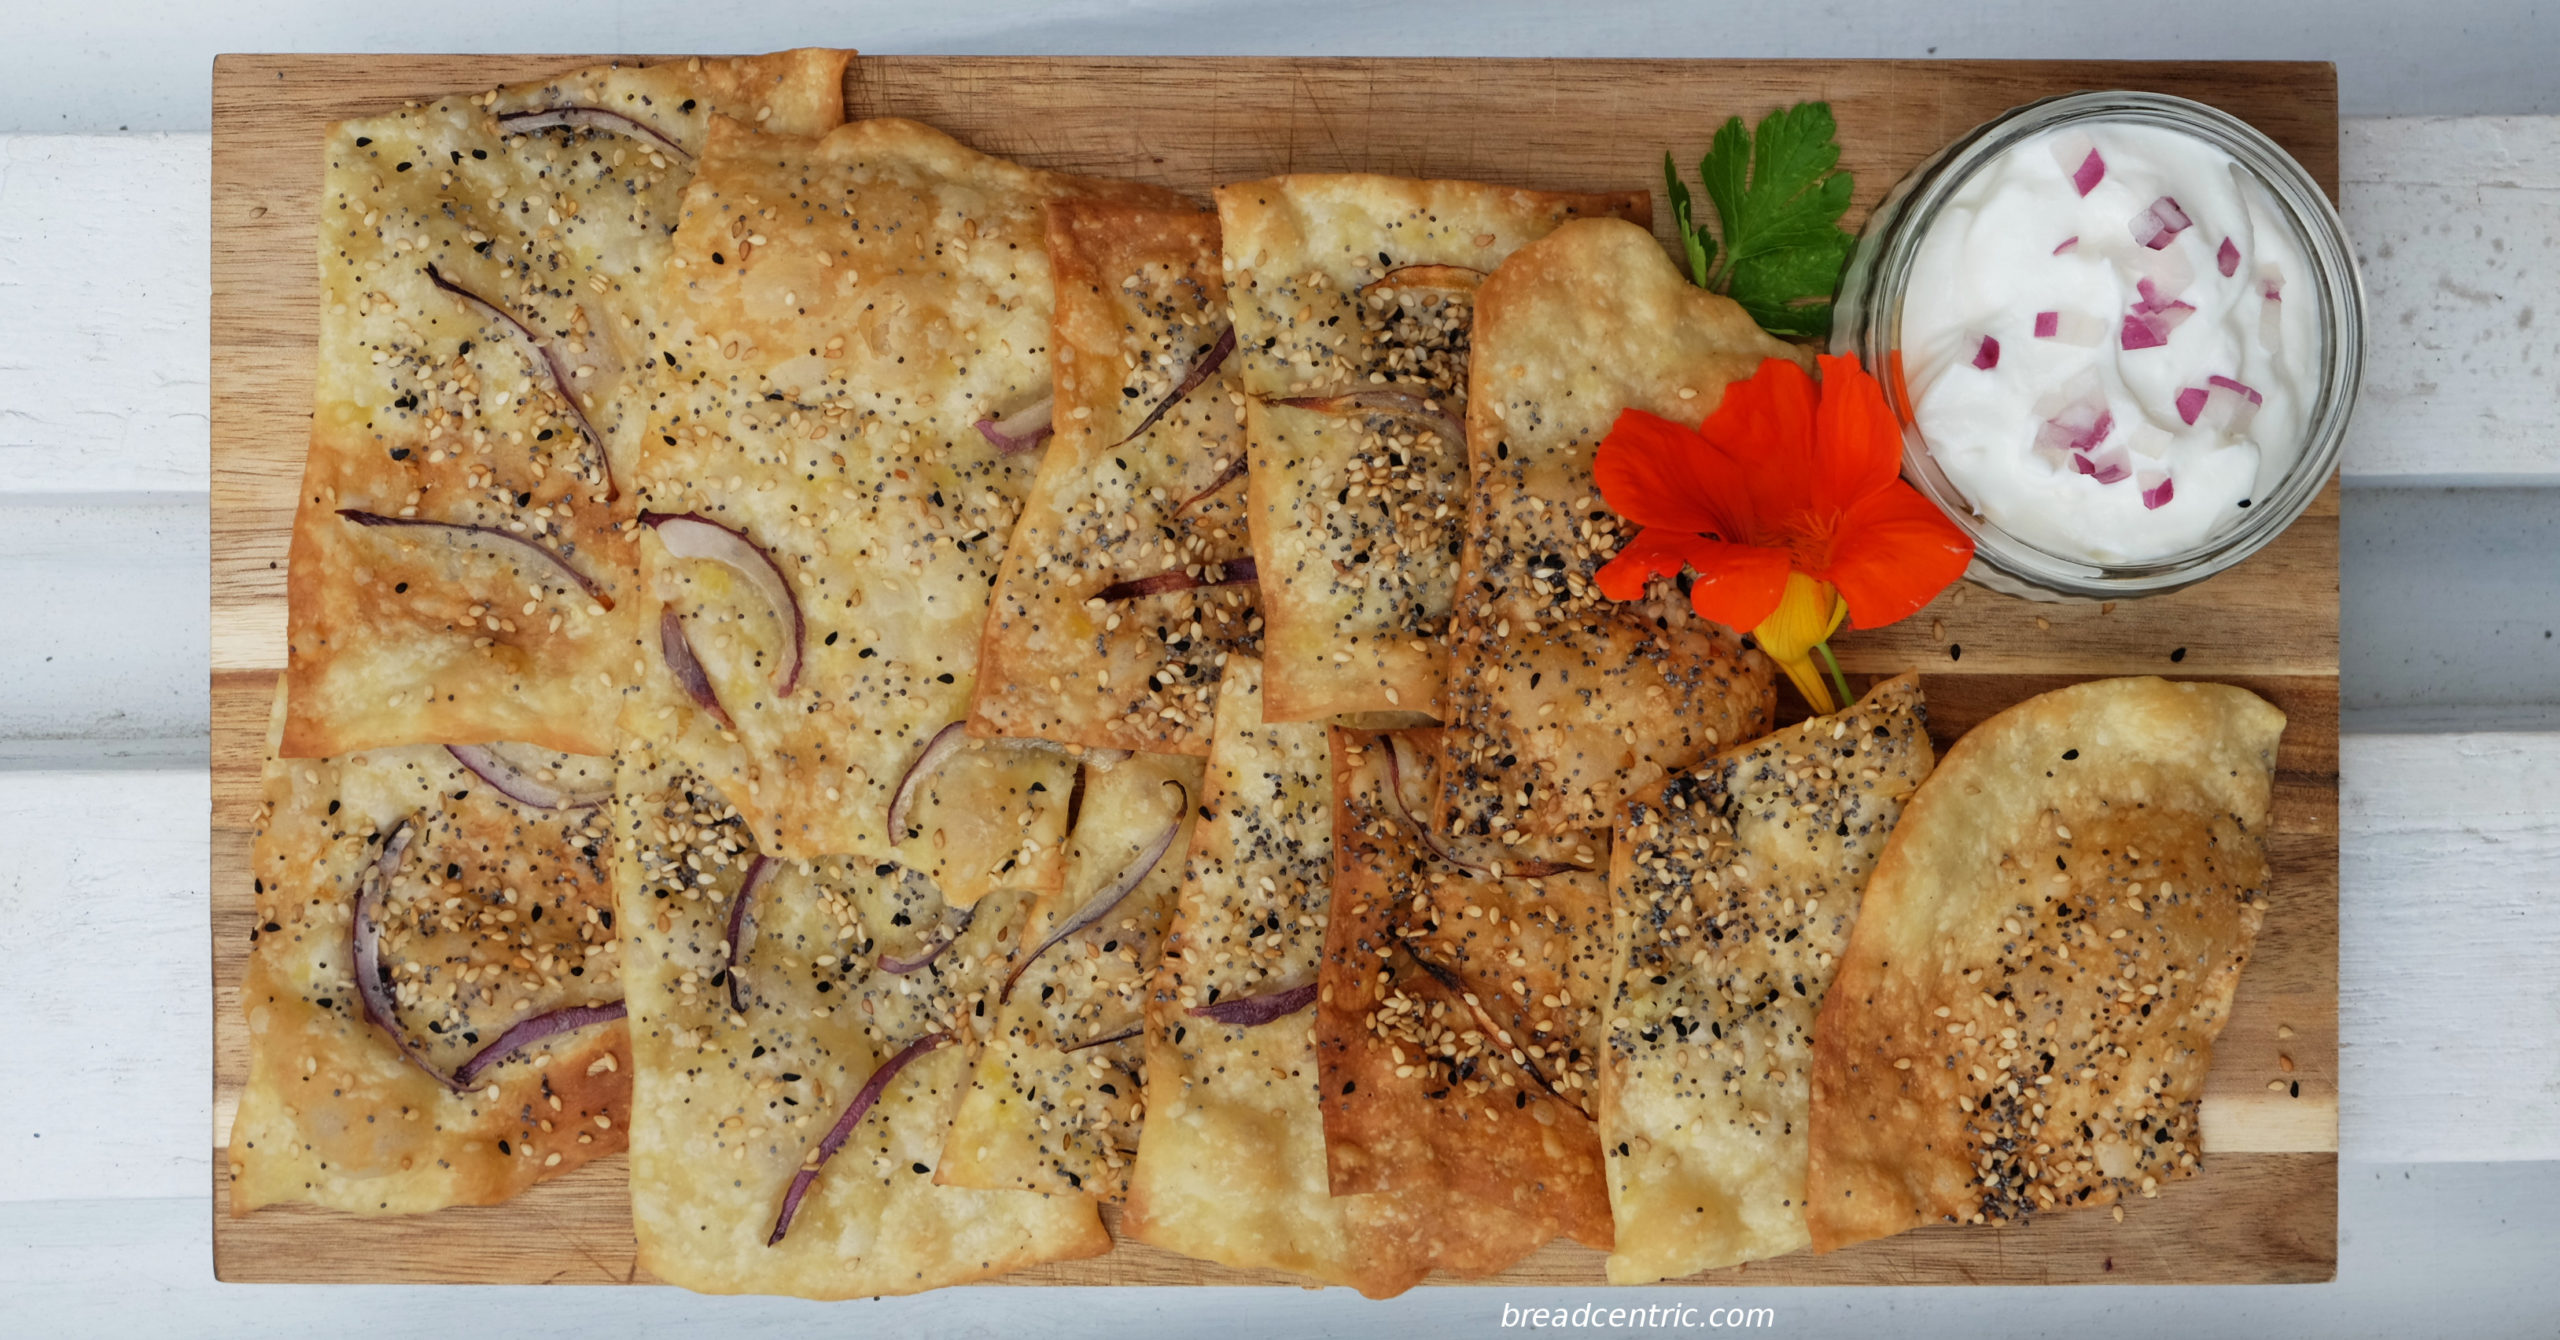 Armenian flatbreads, served with a dip and an edible nasturtium flour (tastes a bit like radish)